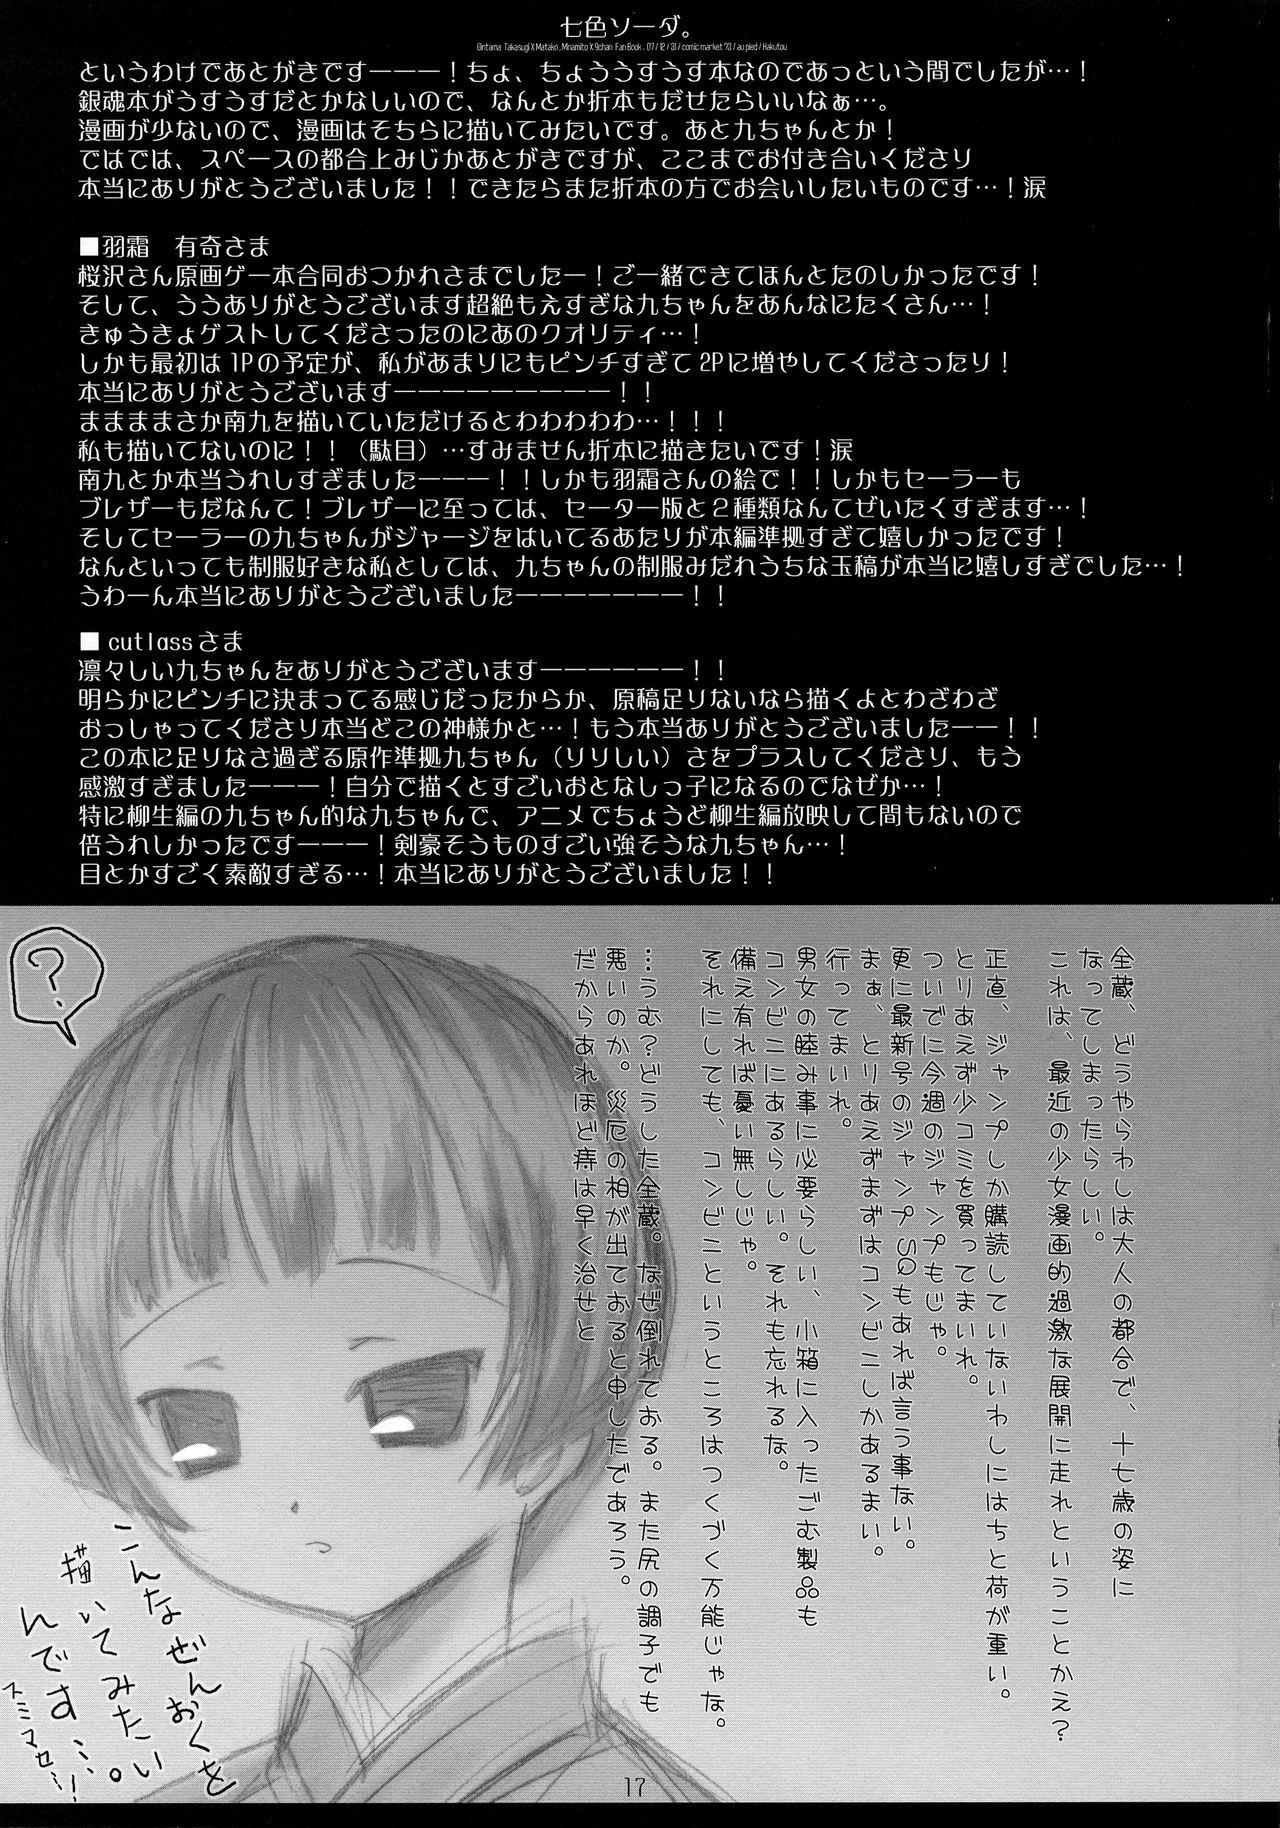 18 Year Old Porn Nanairo Soda. - Gintama Cum Swallow - Page 10